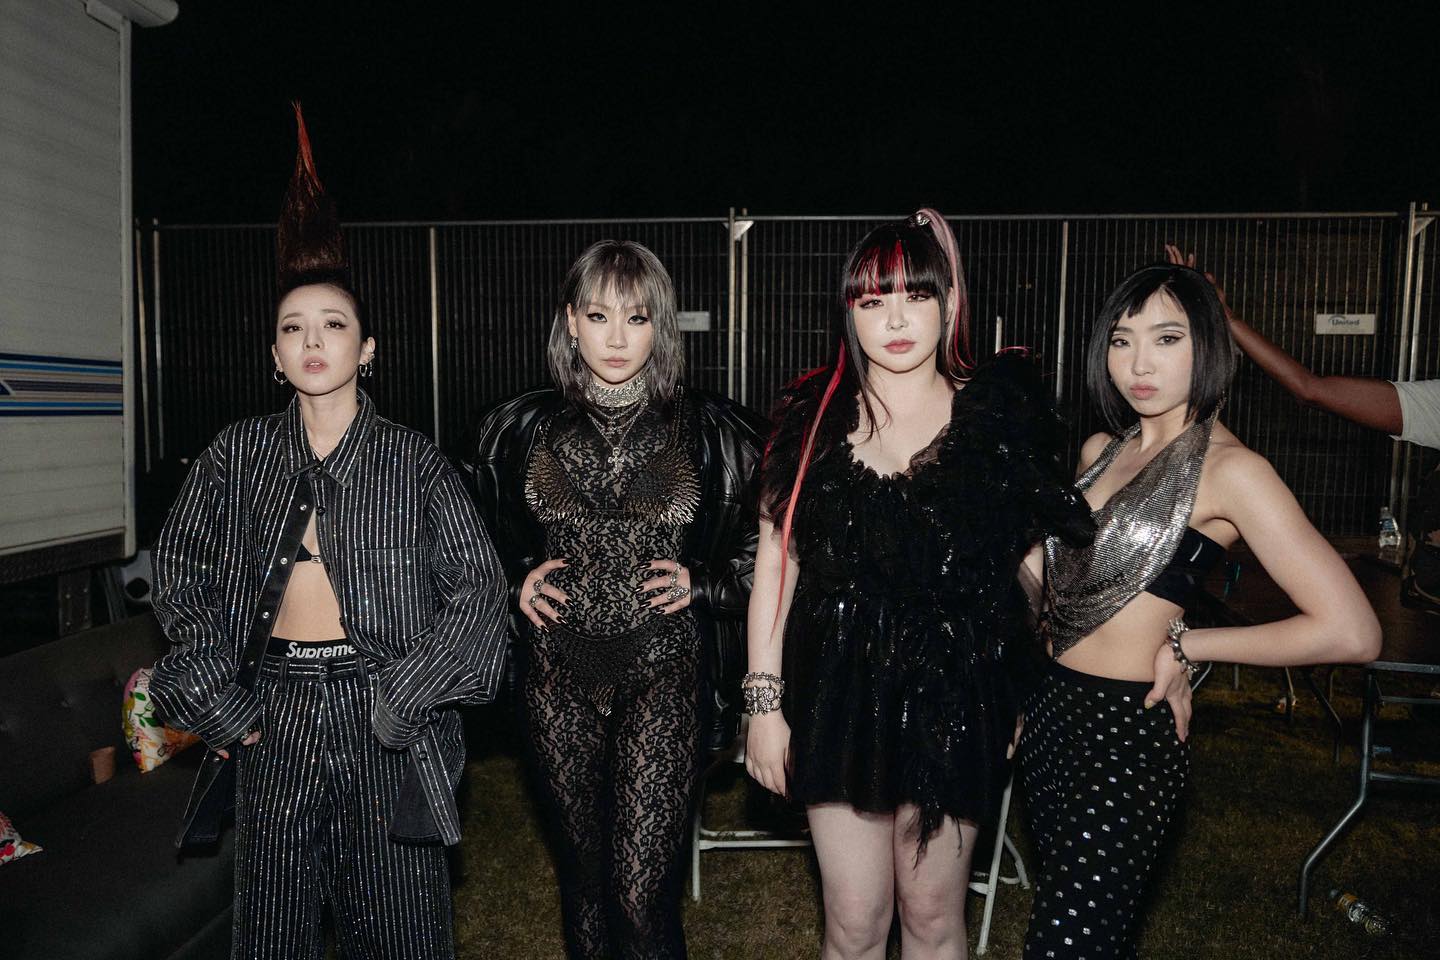 2NE1 didn't renew but they appeared again in Coachella 2022